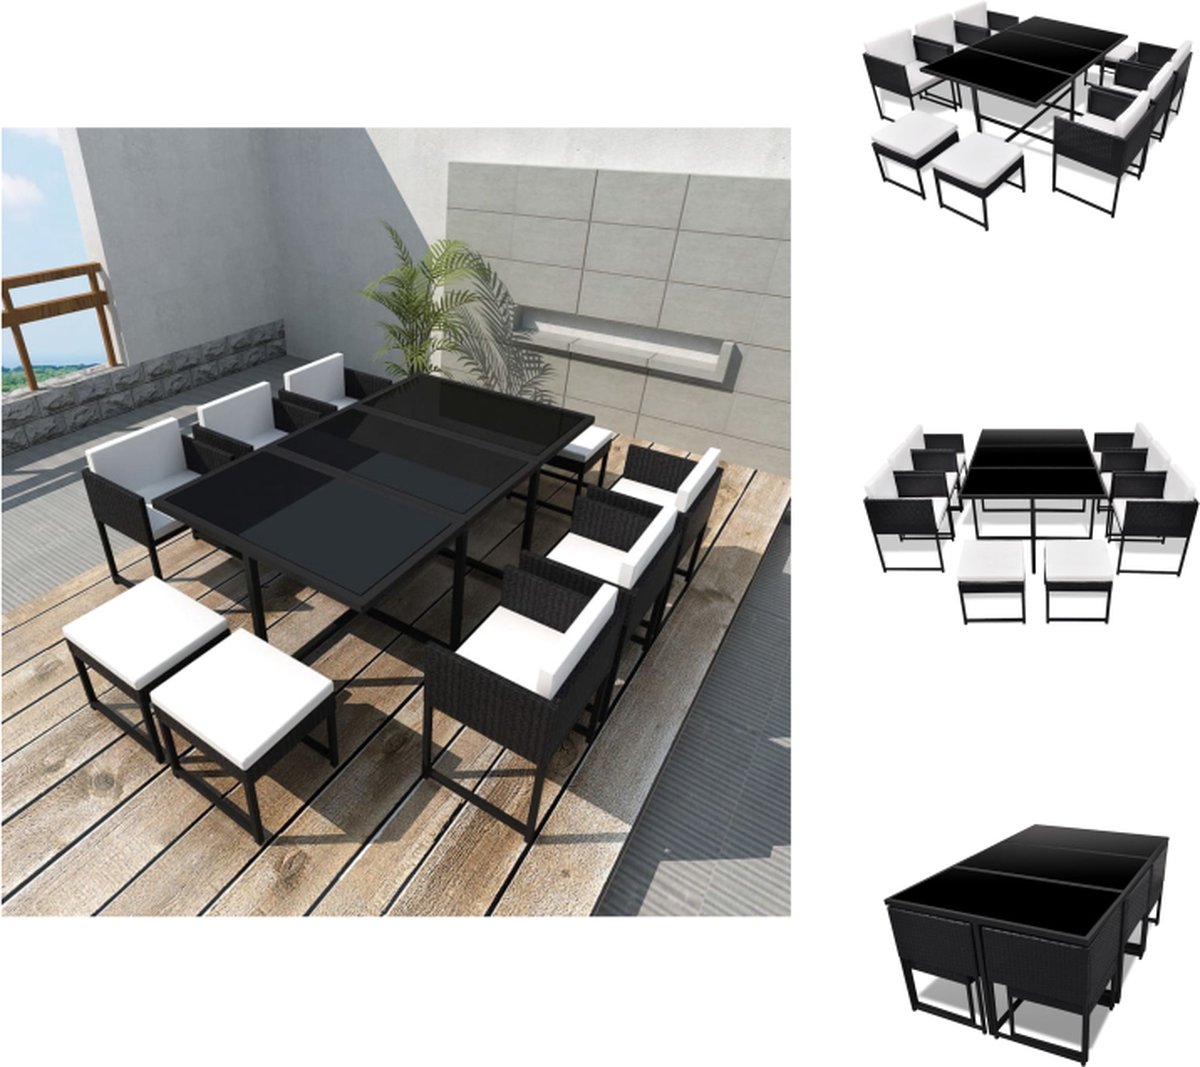 VidaXL Rattan Tuinset Inclusief tafel 6 stoelen 4 krukken Zwart Gehard glas Polyester kussens 165x109x72 cm Tuinset